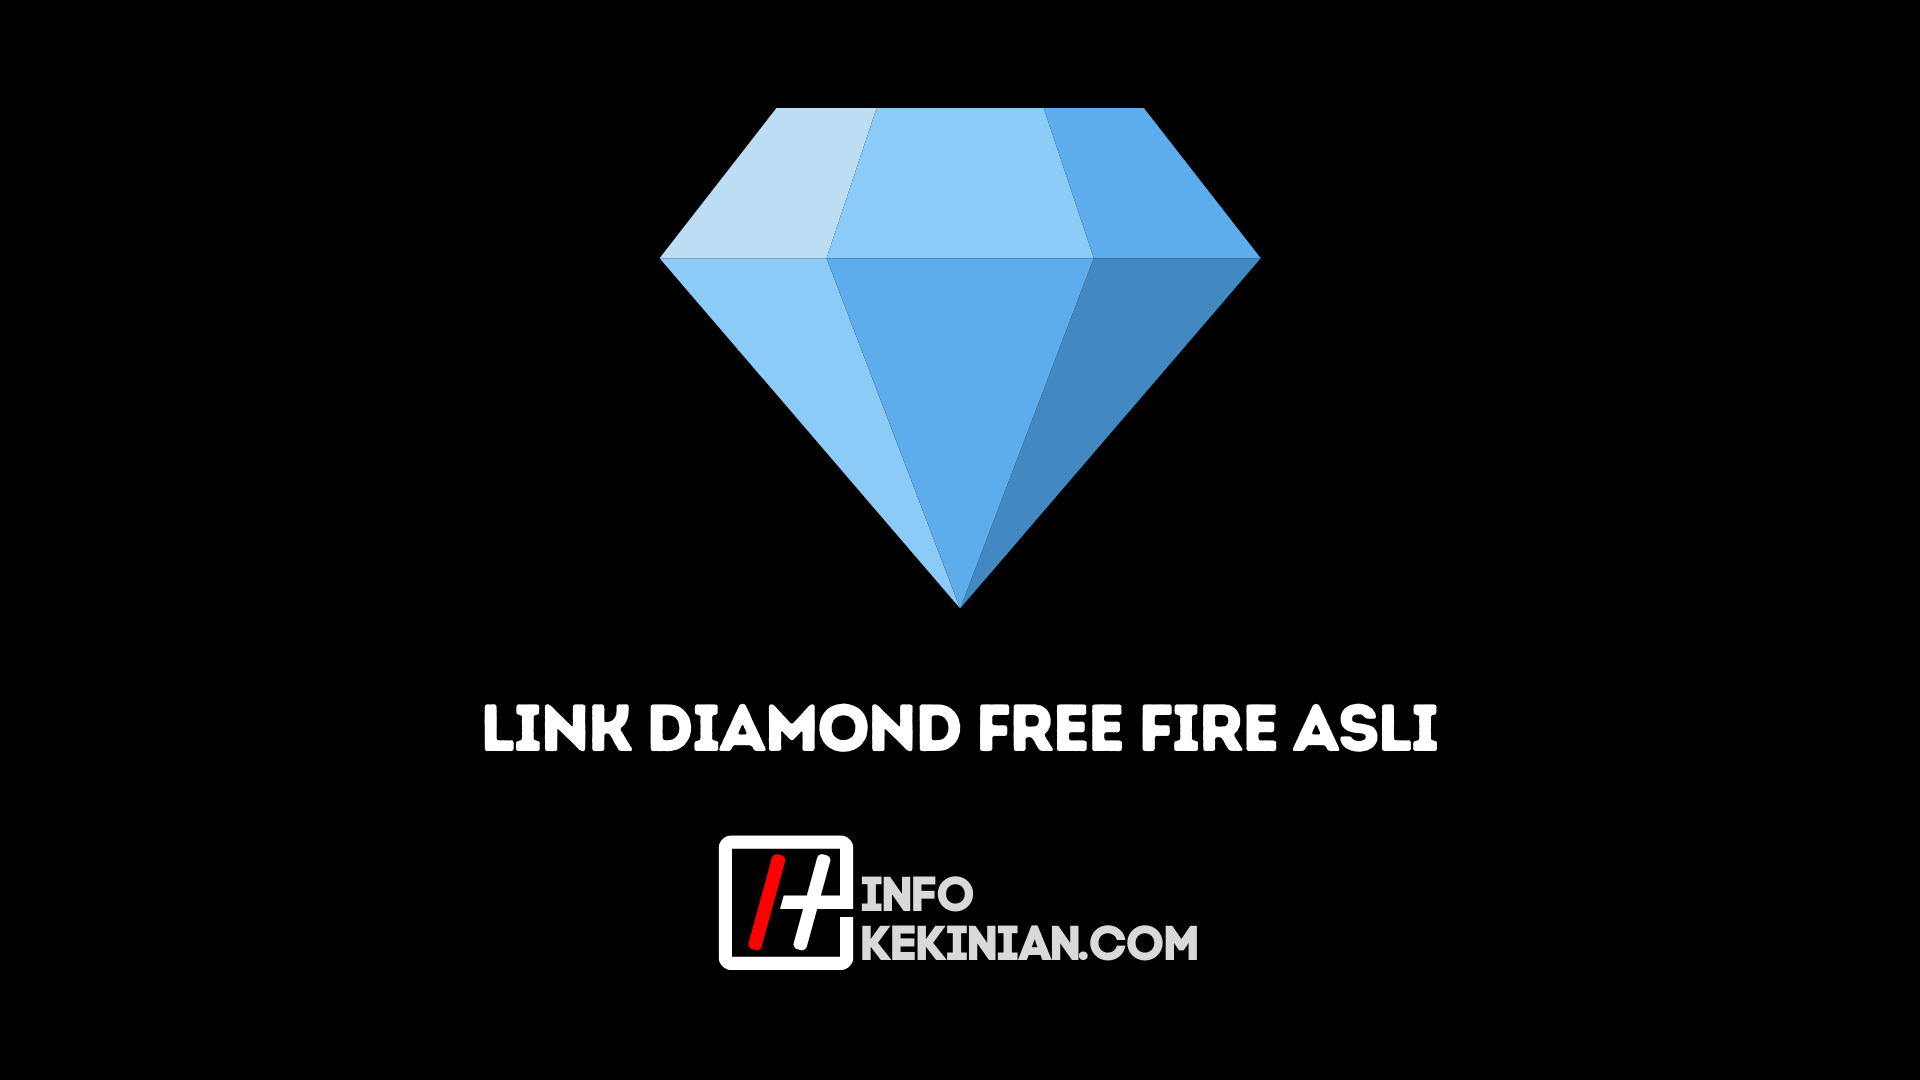 Link Diamond Free Fire Asli